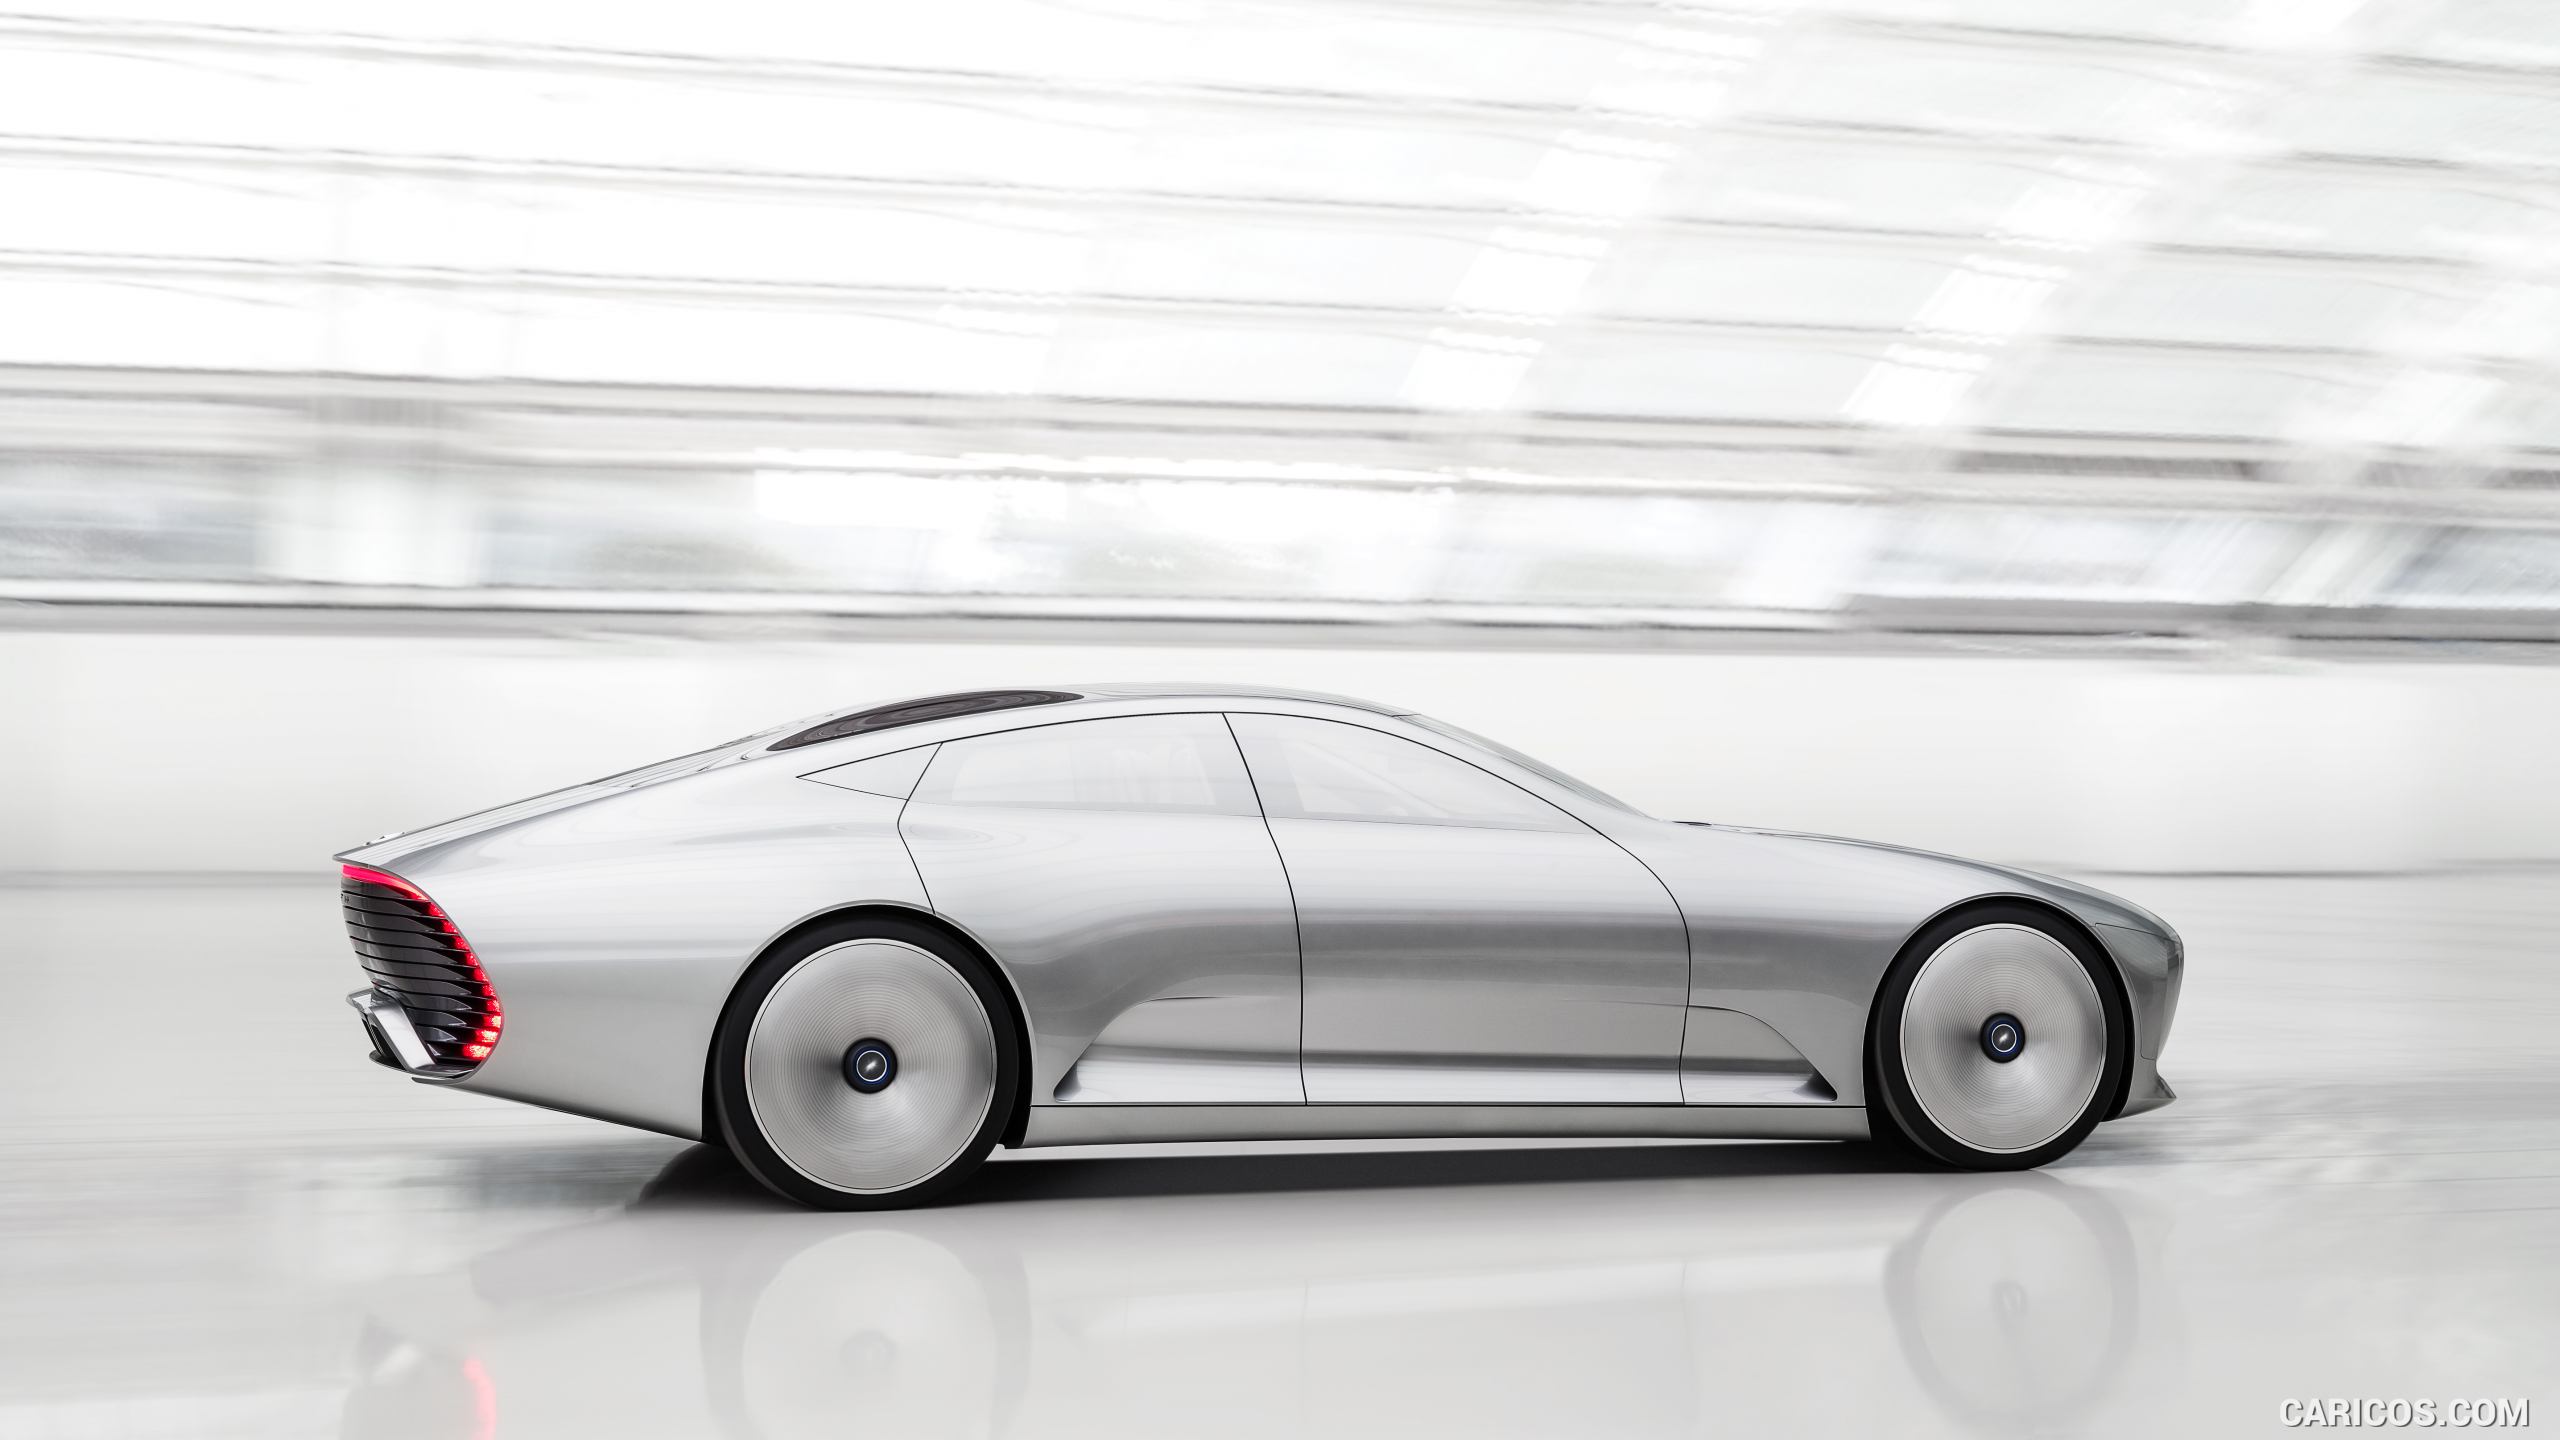 2015 Mercedes-Benz Concept IAA (Intelligent Aerodynamic Automobile) - Side, #29 of 49